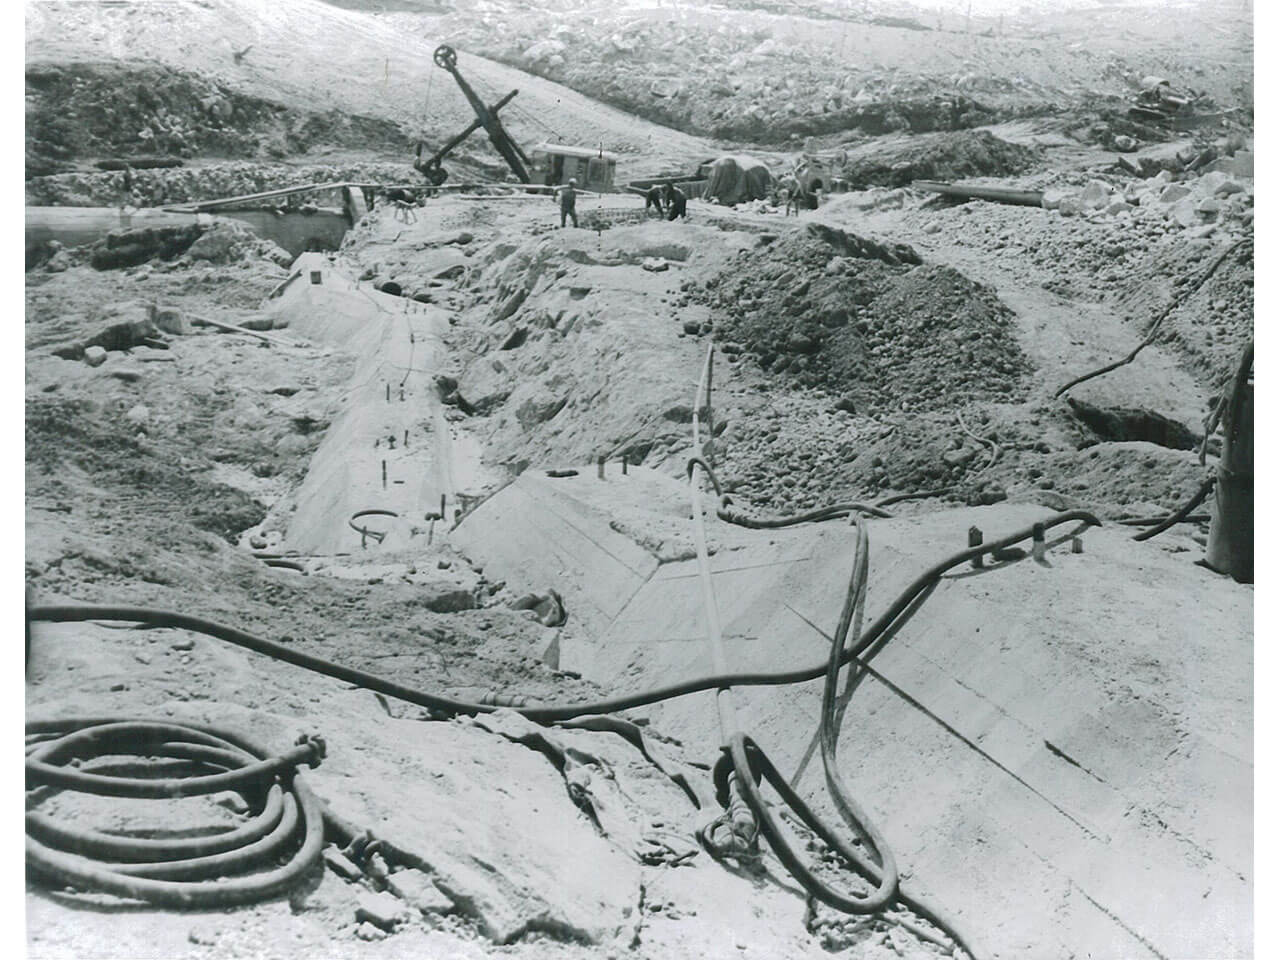 Paluma Dam - Installation of grout curtain below earth wall (1958)